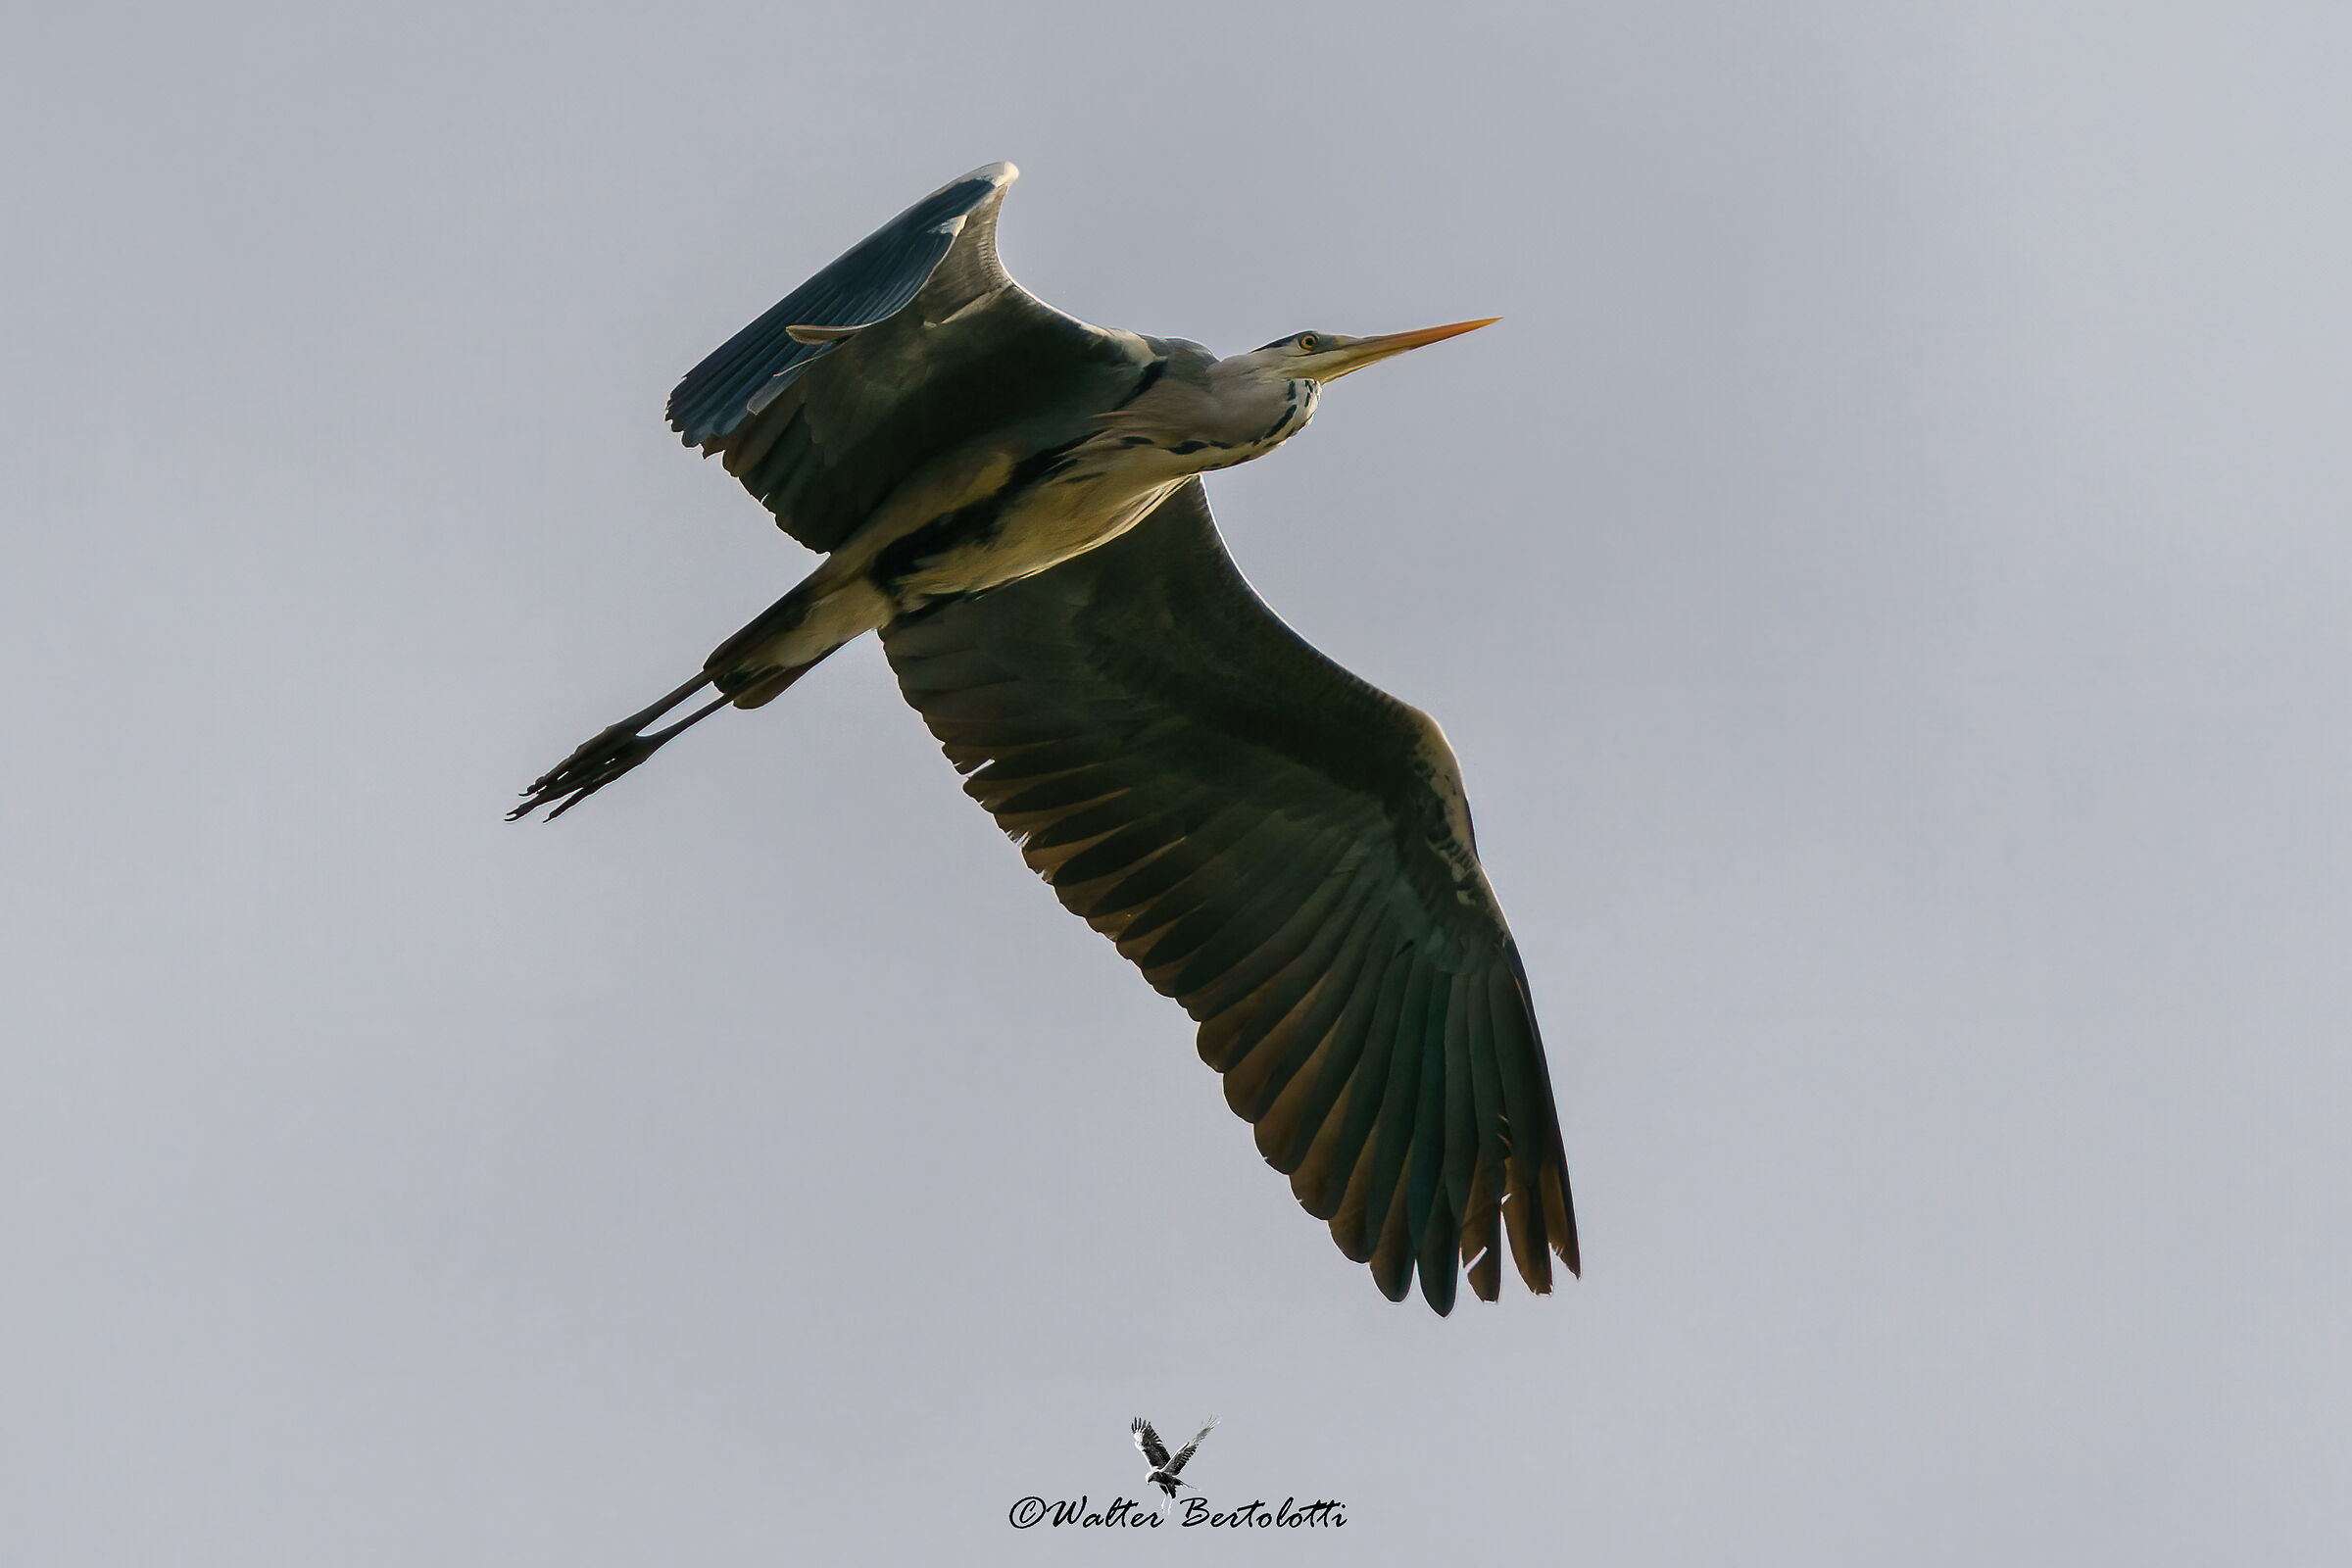 the flight of the heron...